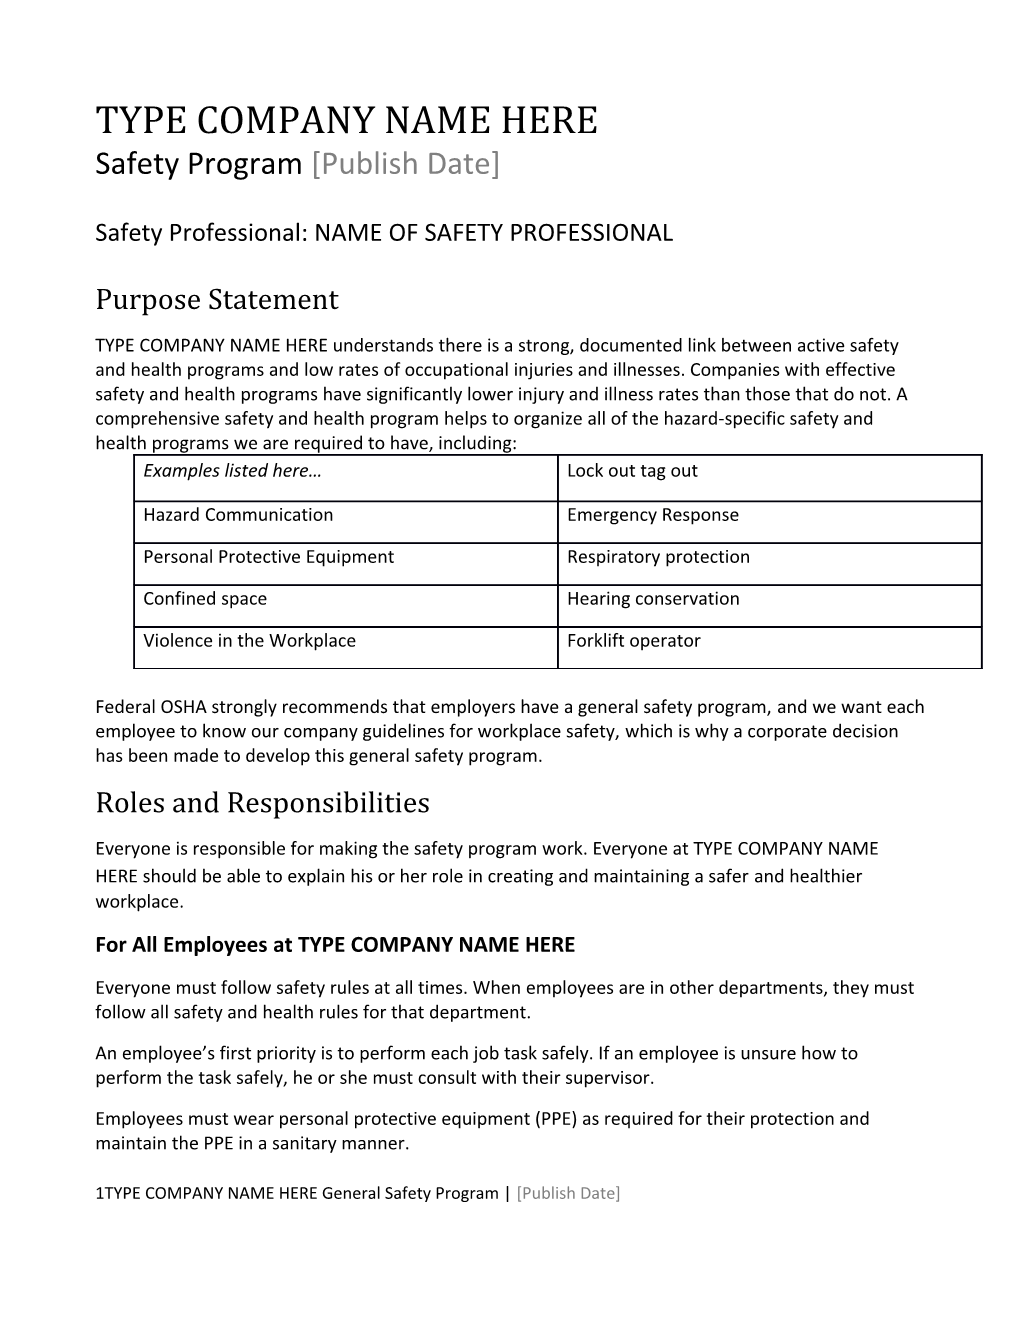 NTE Safety Program